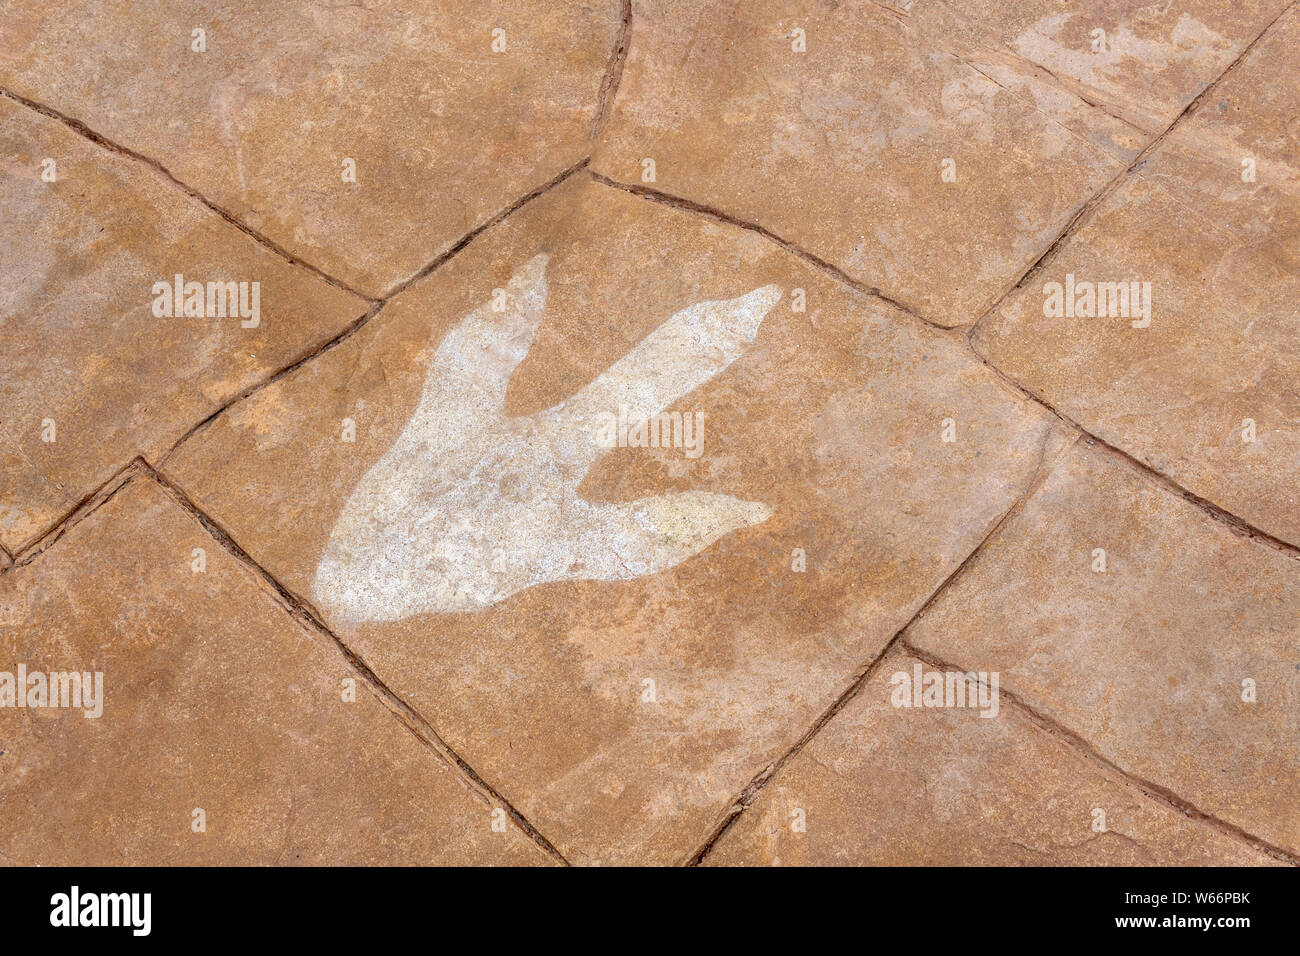 Sirindhorn Museum, Karasin Province Thailand - July 20, 2019: Dinosaur footprints on marble background Stock Photo